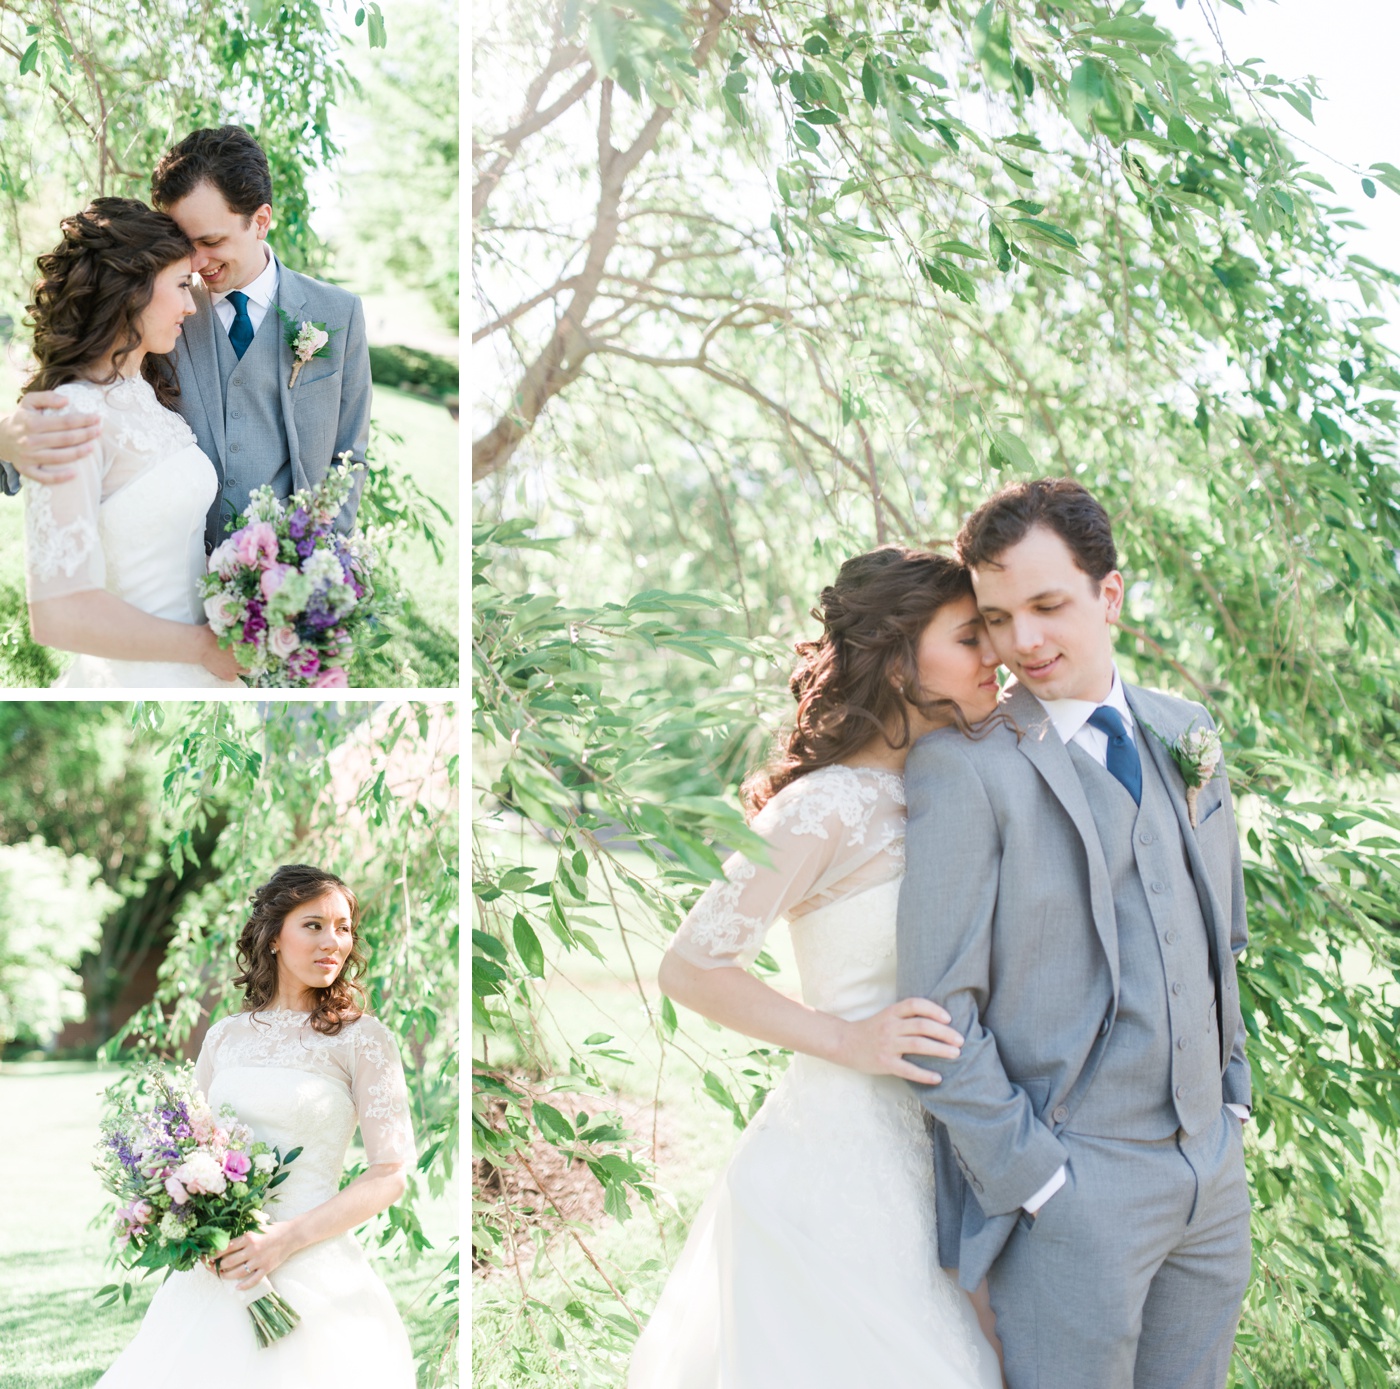 Julia + Bryan - West Chester Pennsylvania Wedding Photographer - Alison Dunn Photography photo